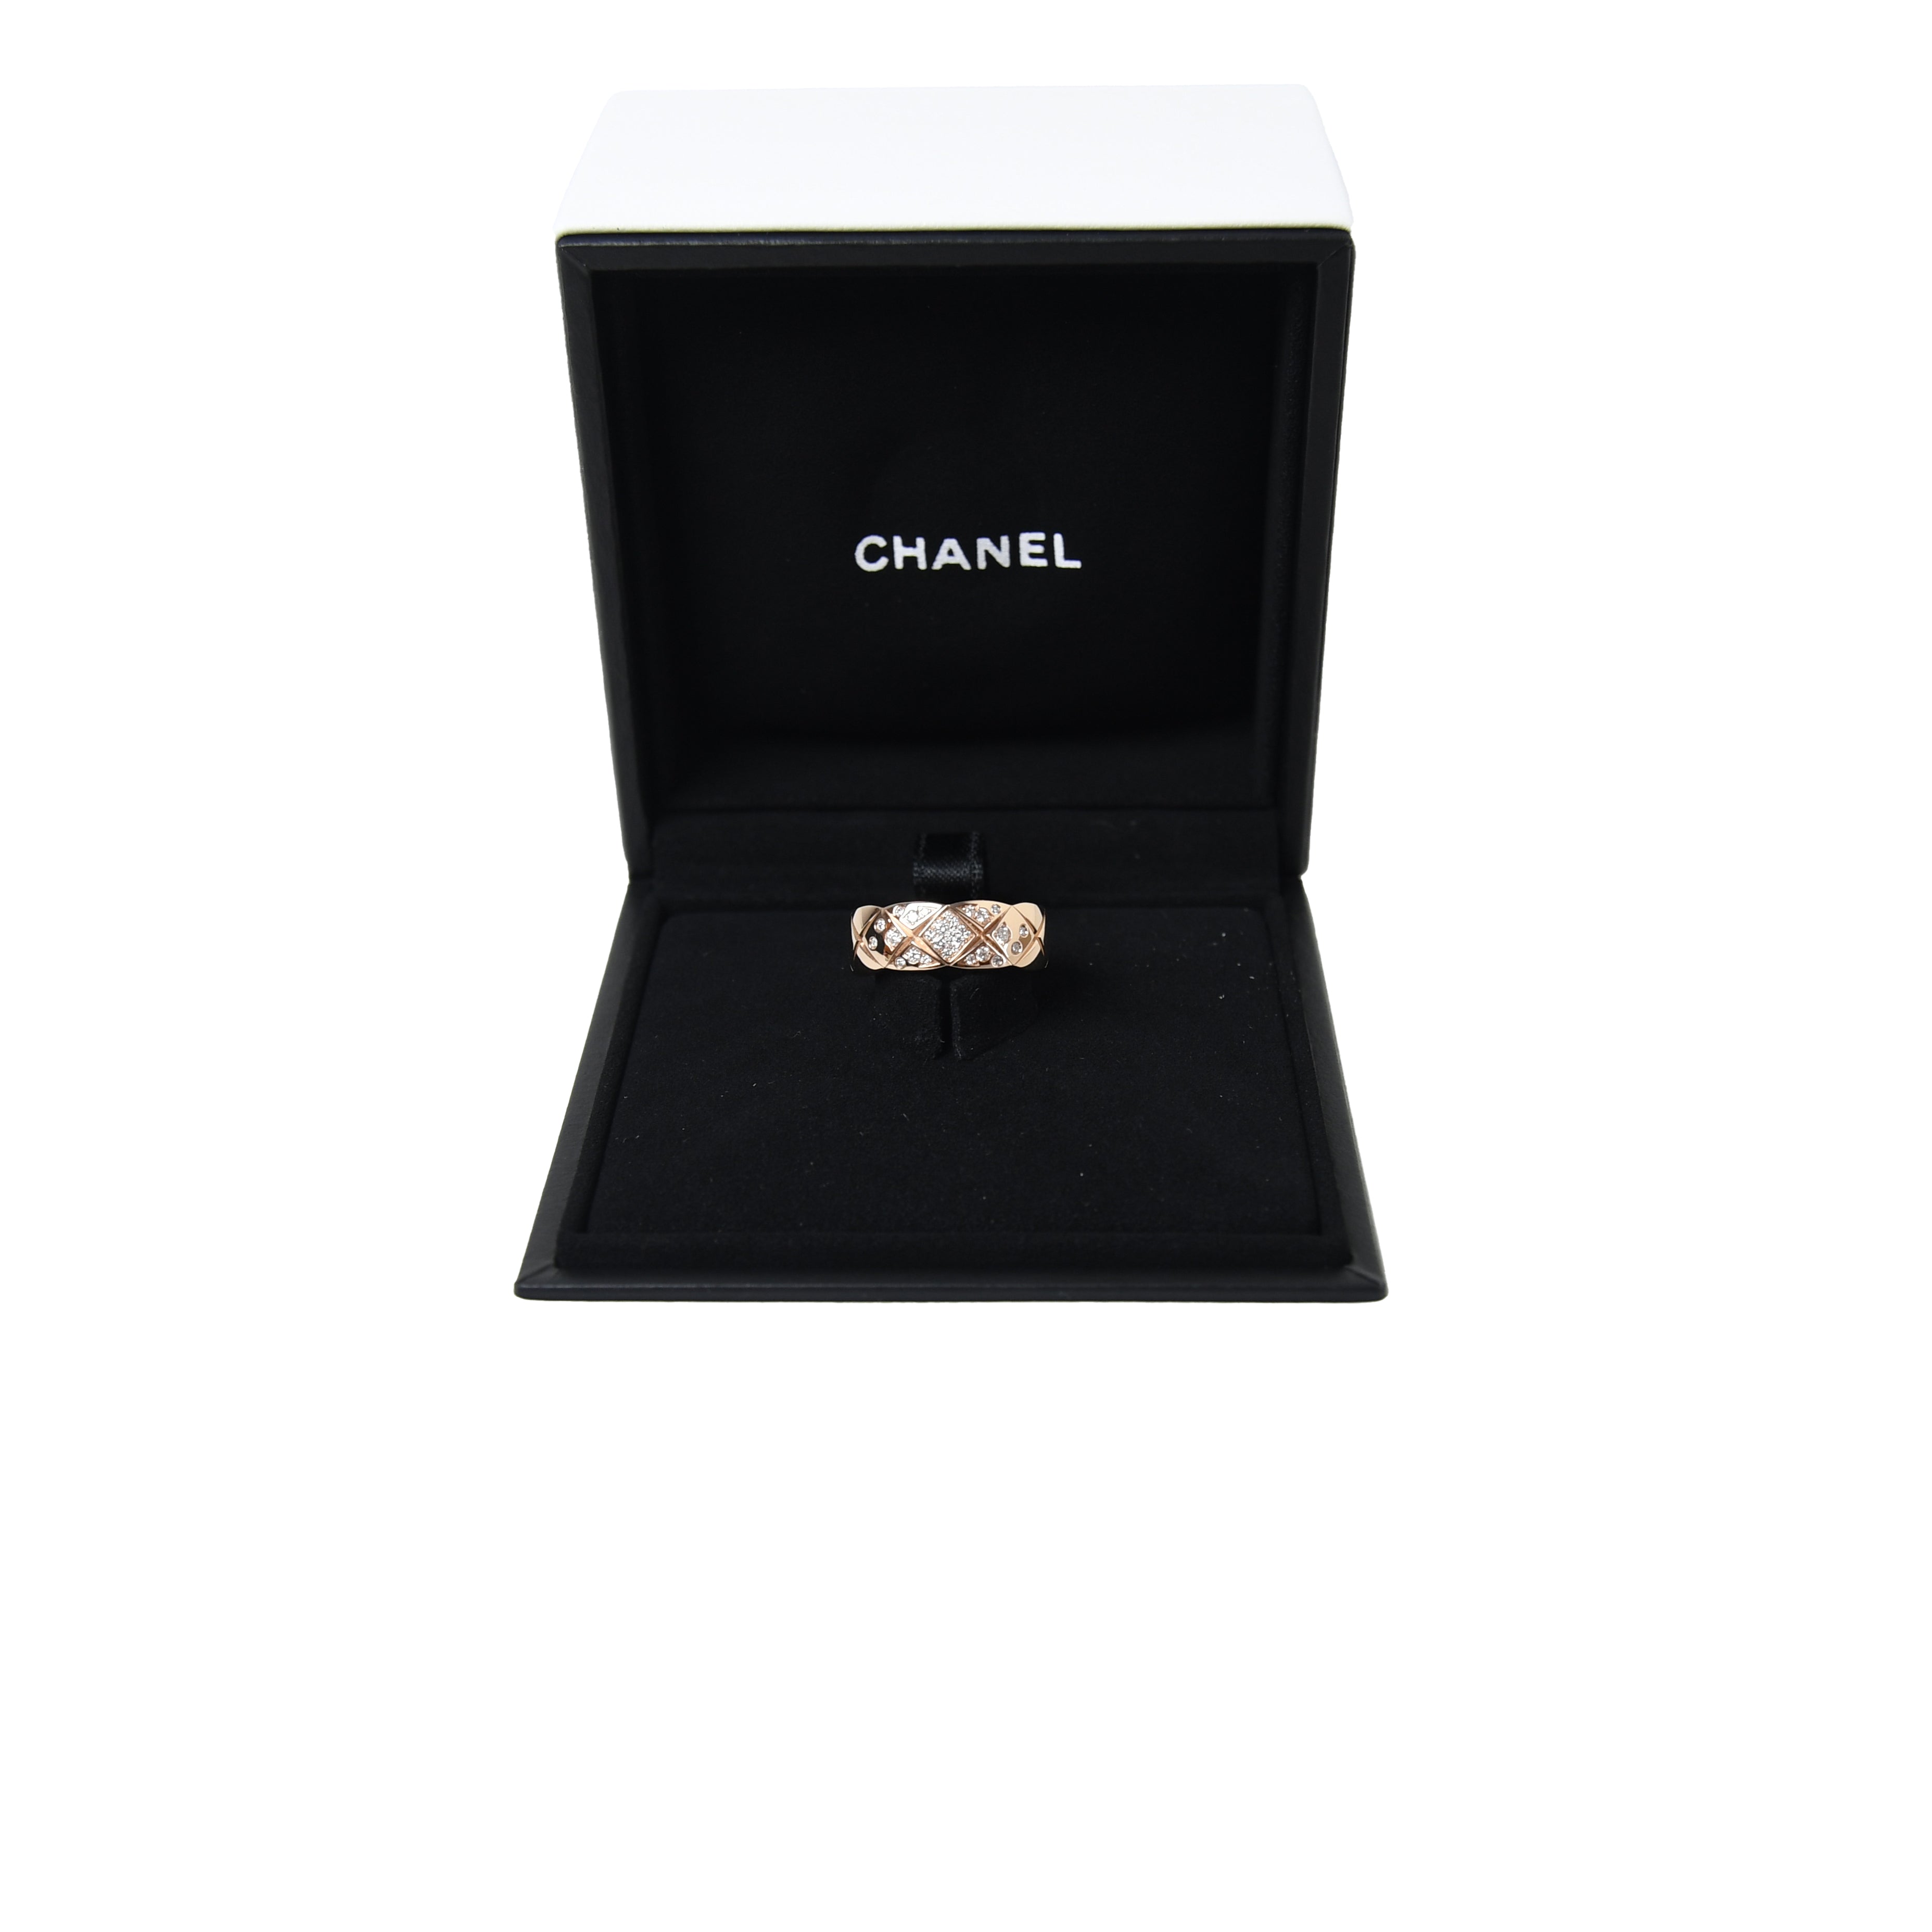 Chanel Coco Crush #53 Ring No. 12.5 18K K18 Yellow Gold Diamond Women's Size 6.5